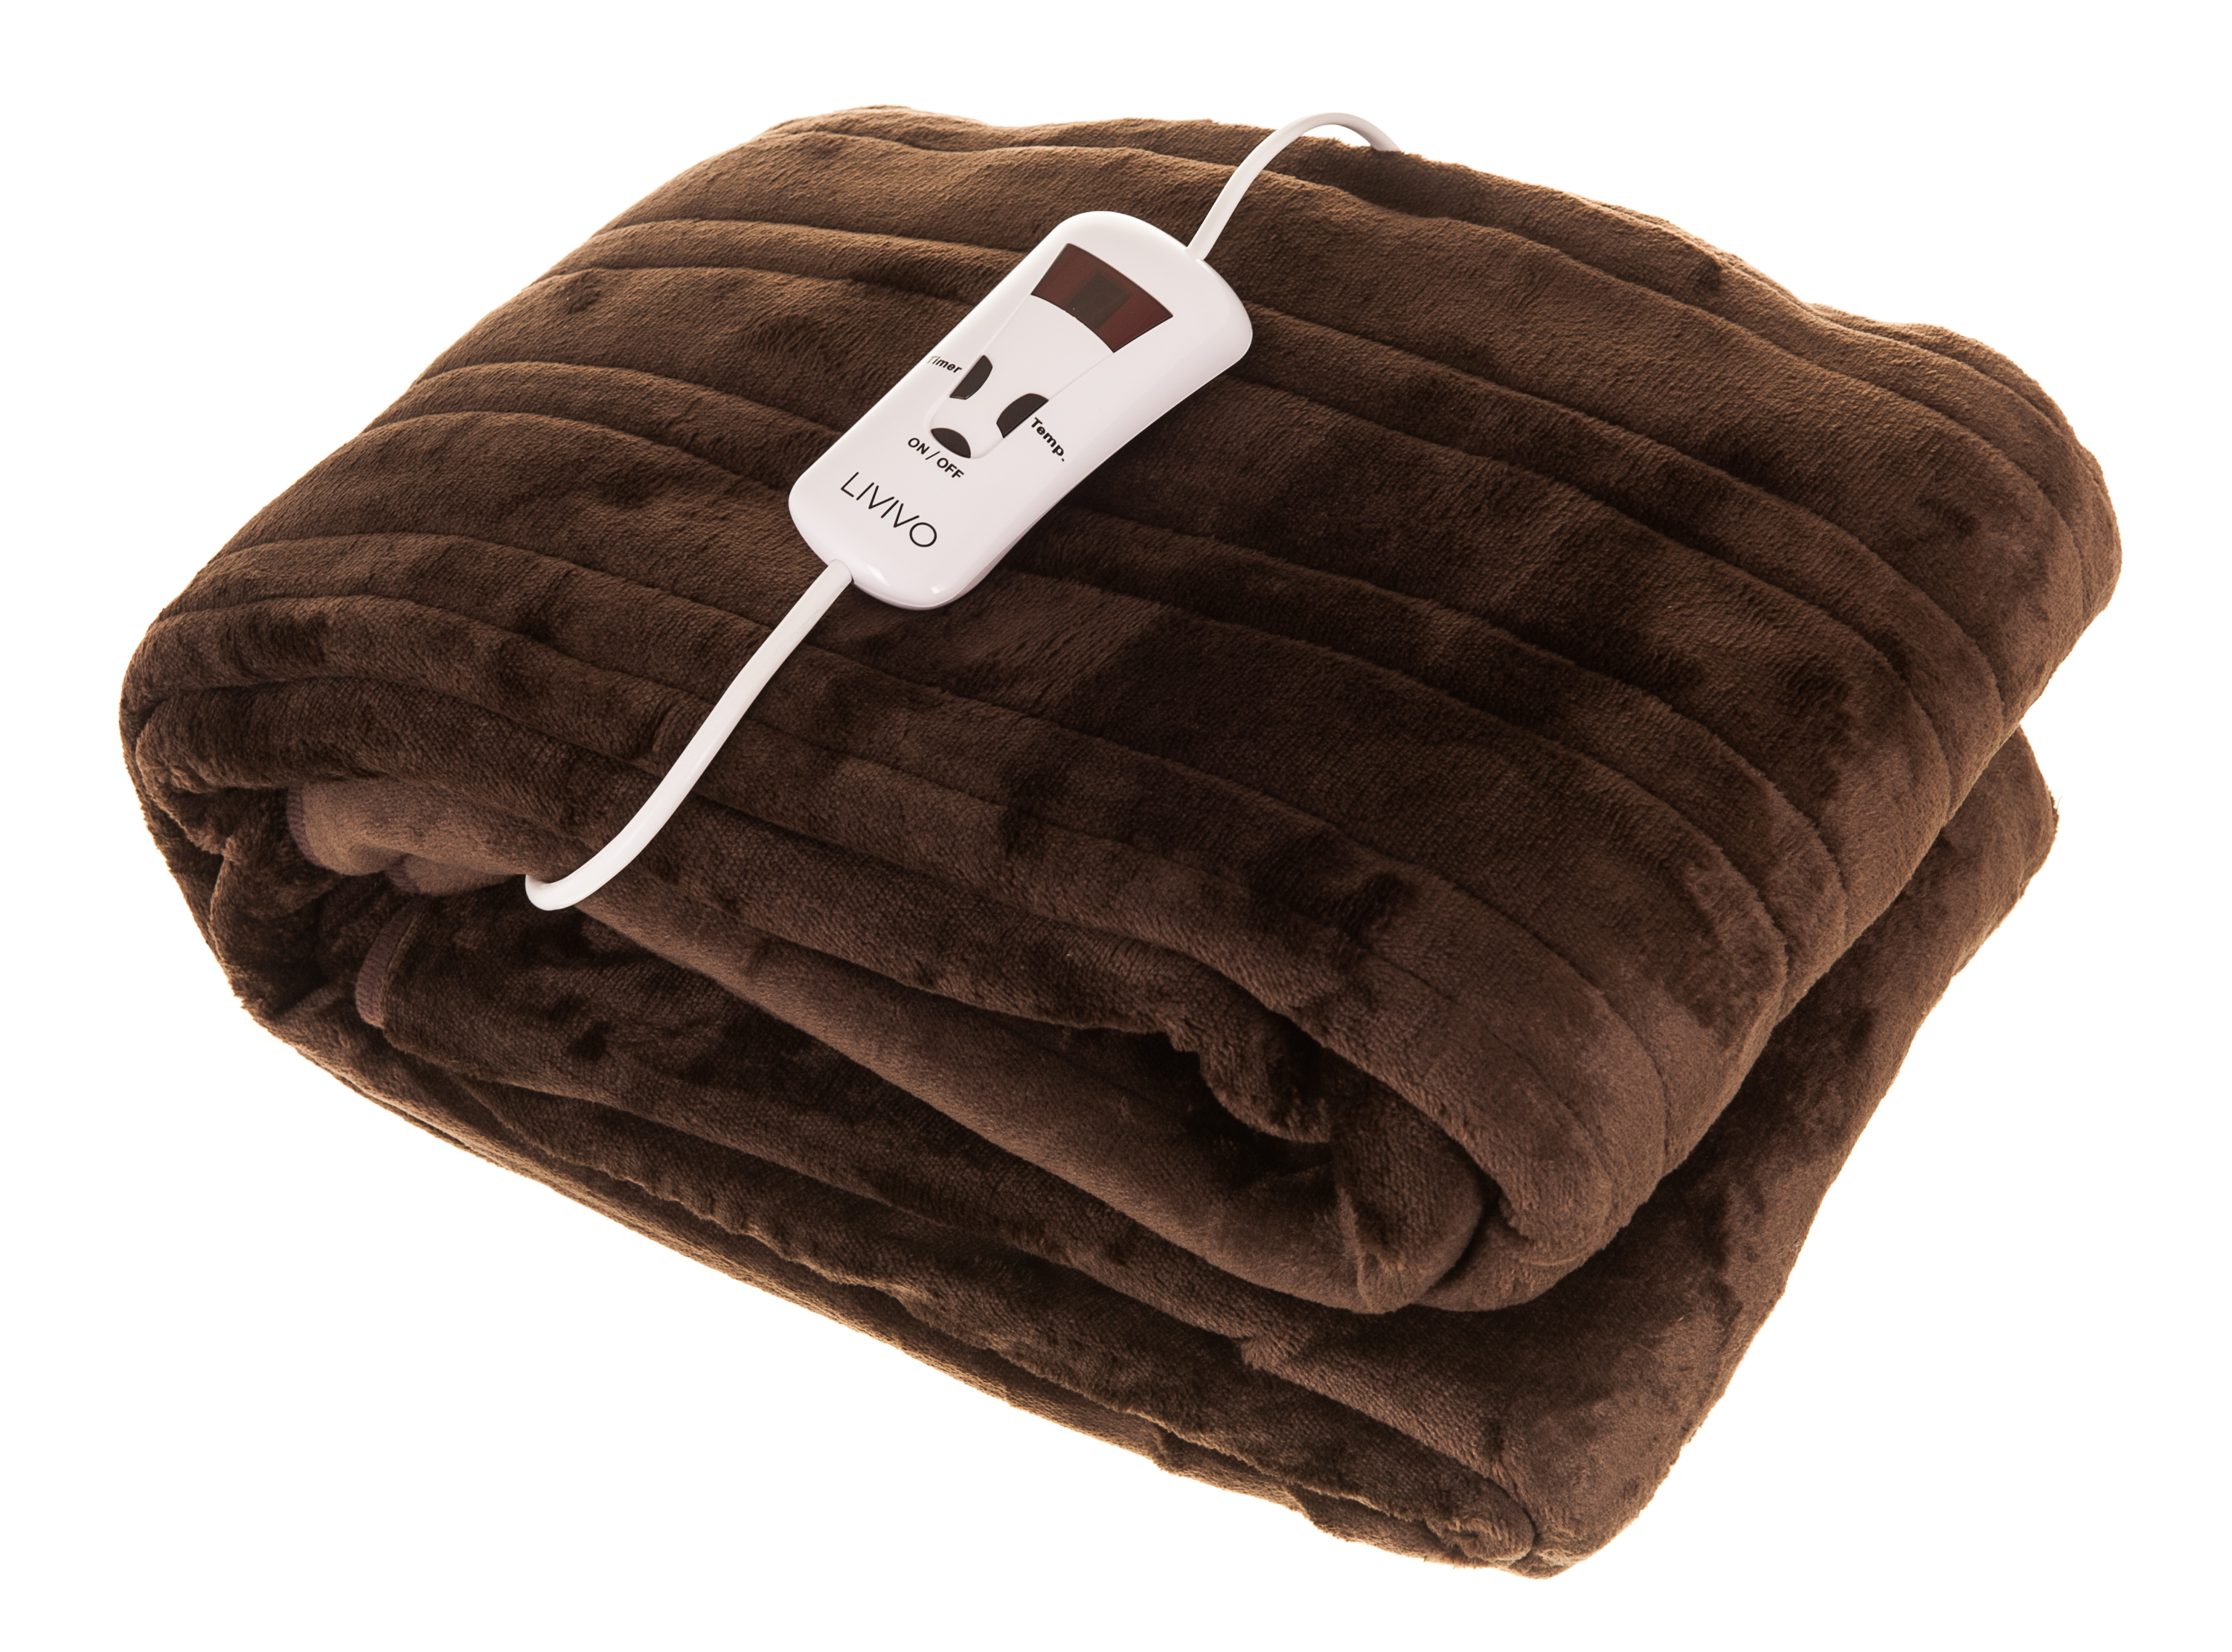 heated blanket air mattress